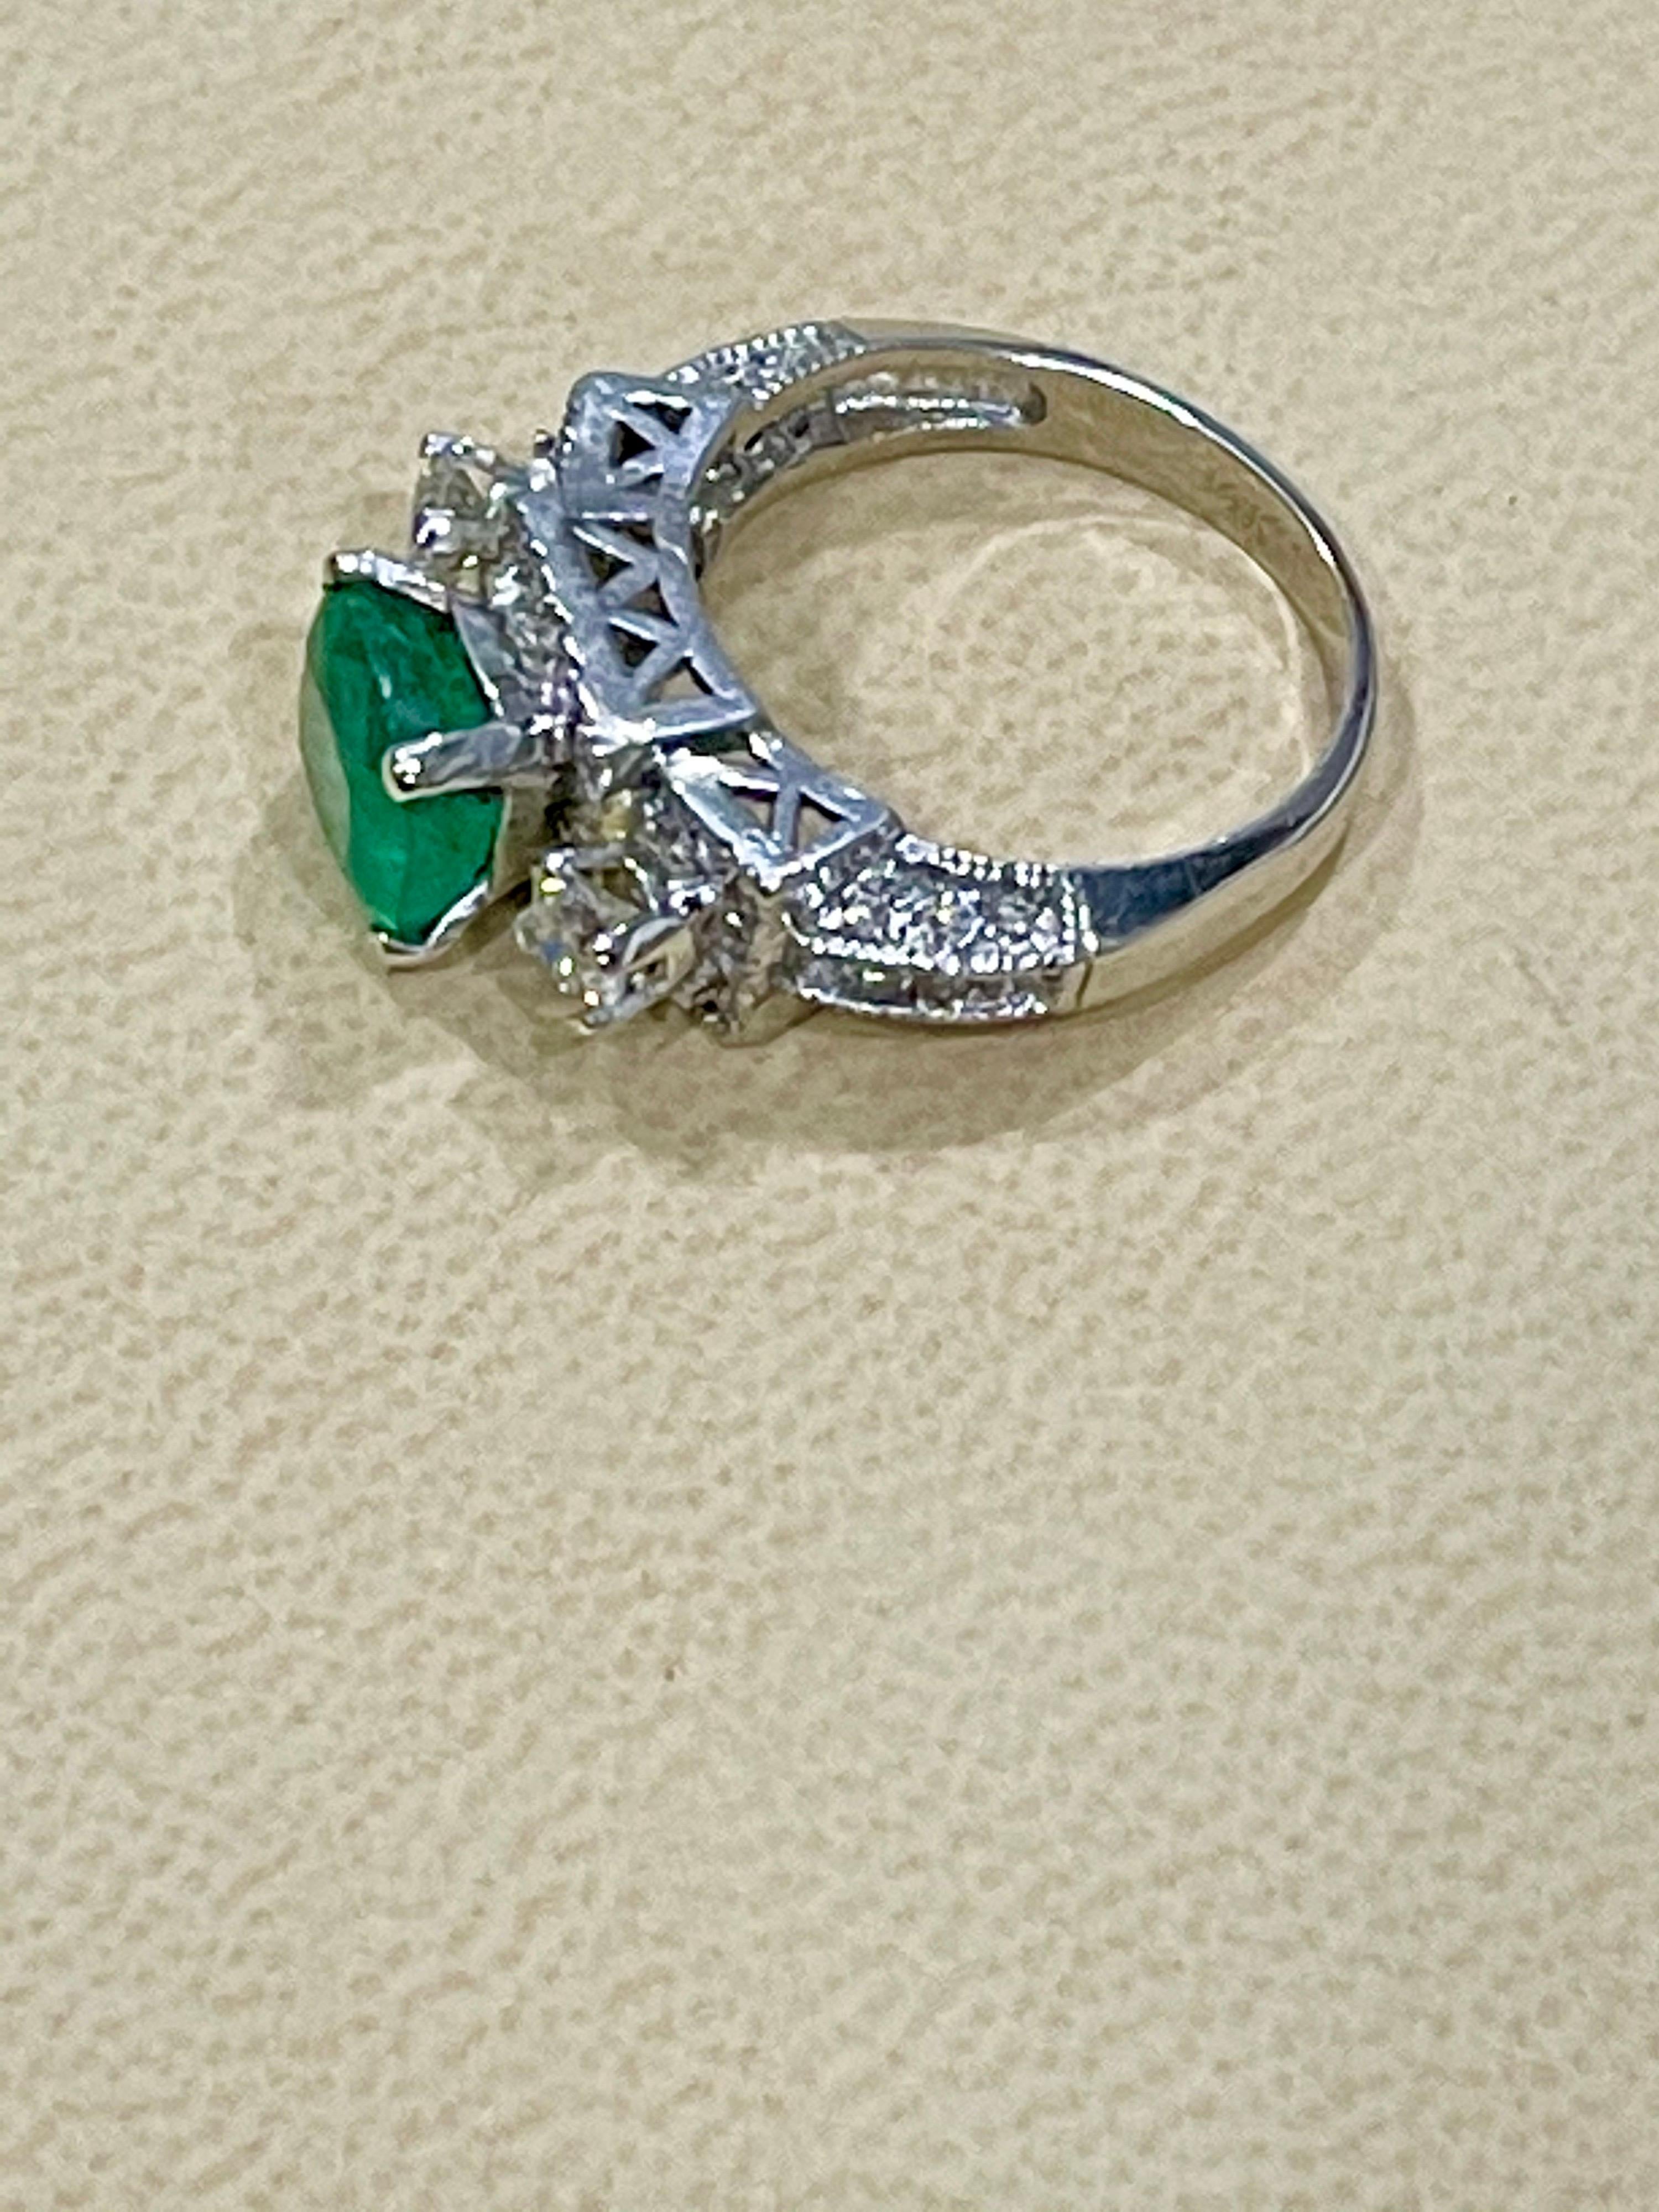 2 Carat Natural Cushion Cut Emerald & Diamond Ring 14 Karat White Gold For Sale 2